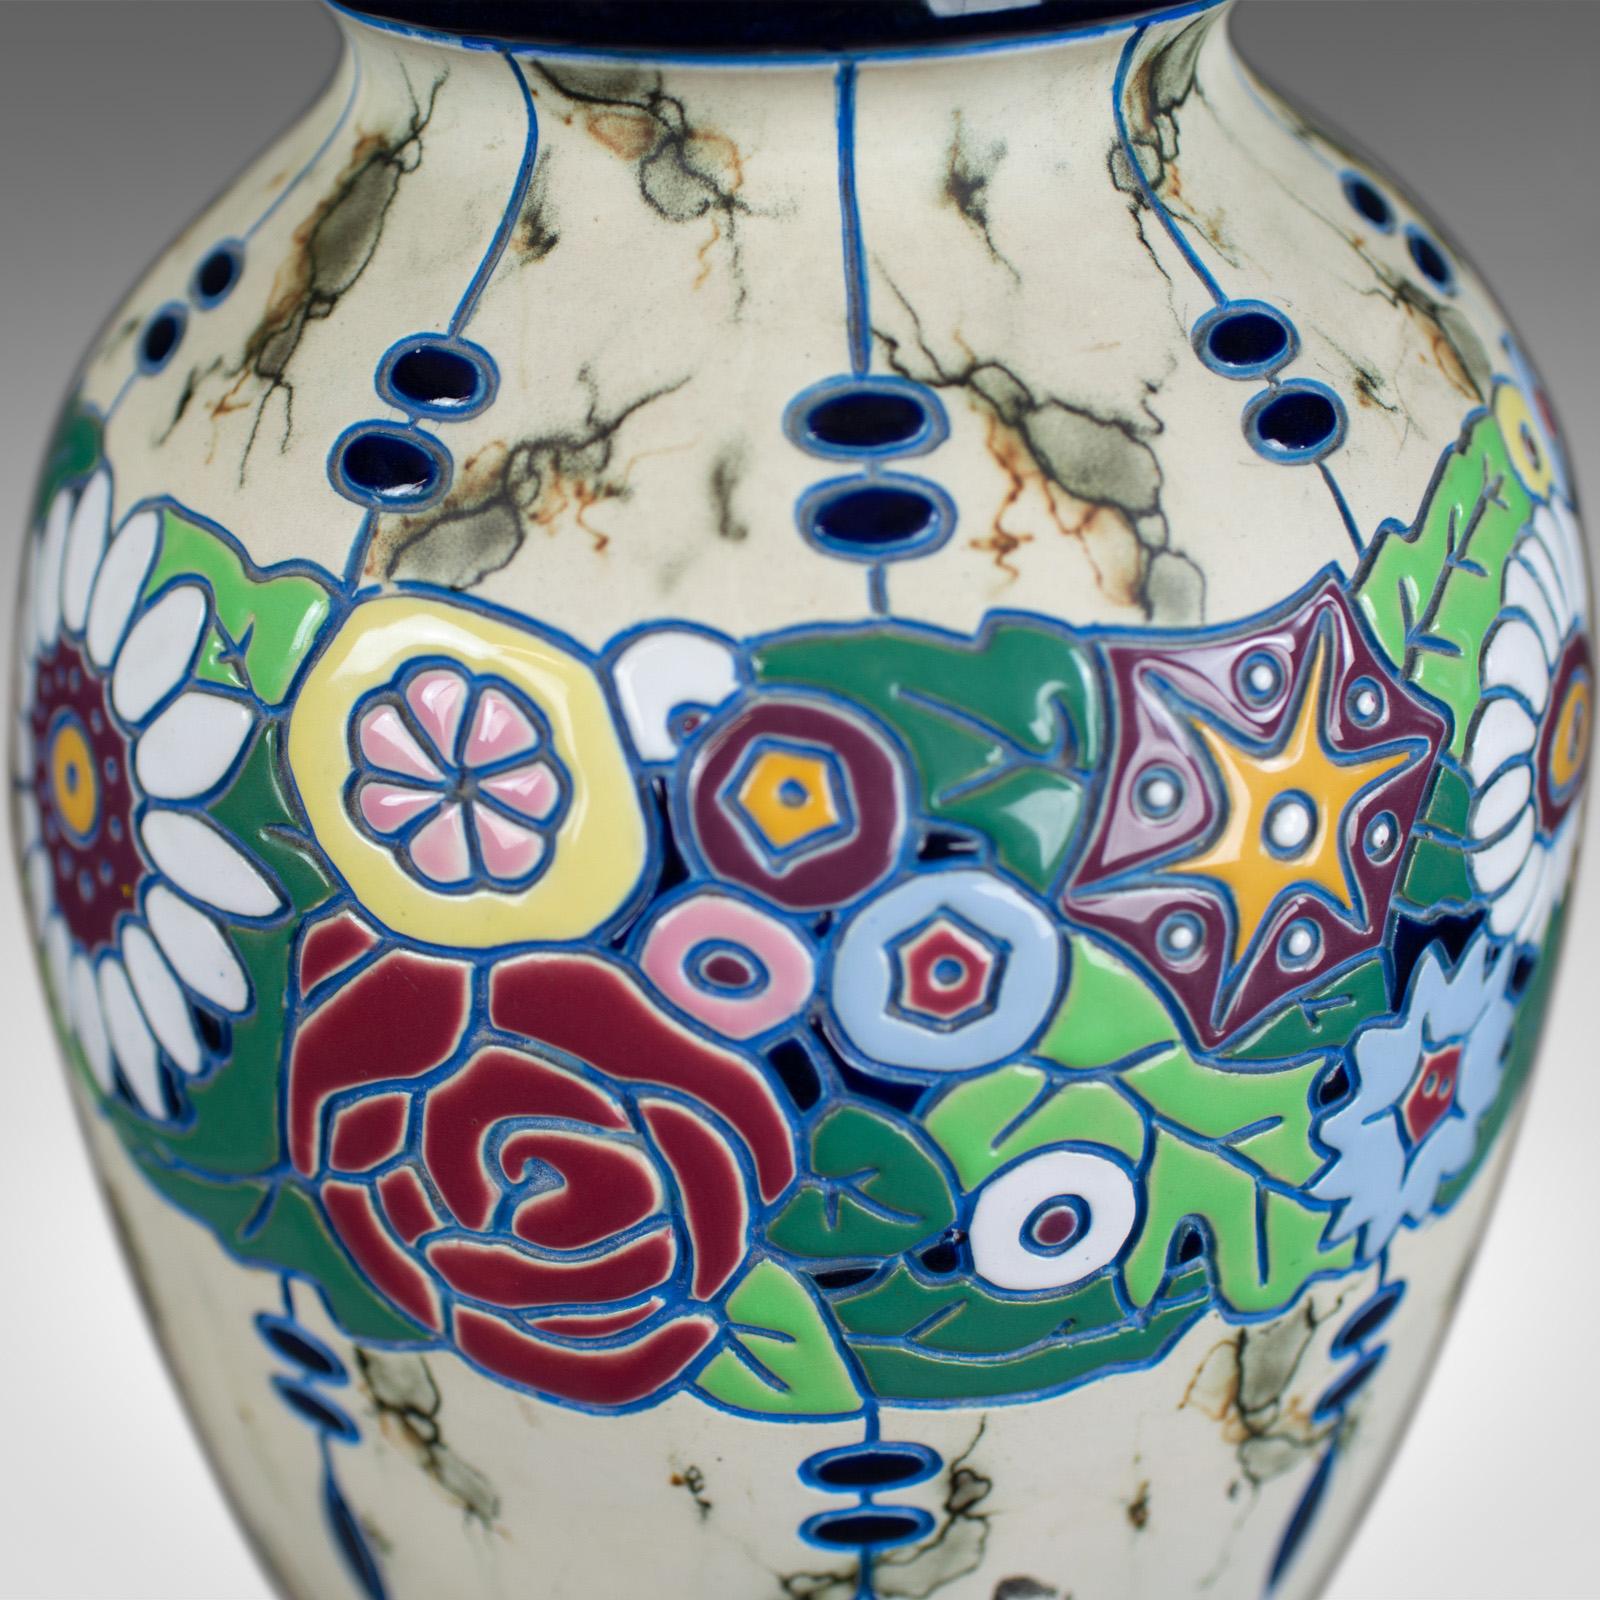 amphora vase made in czechoslovakia